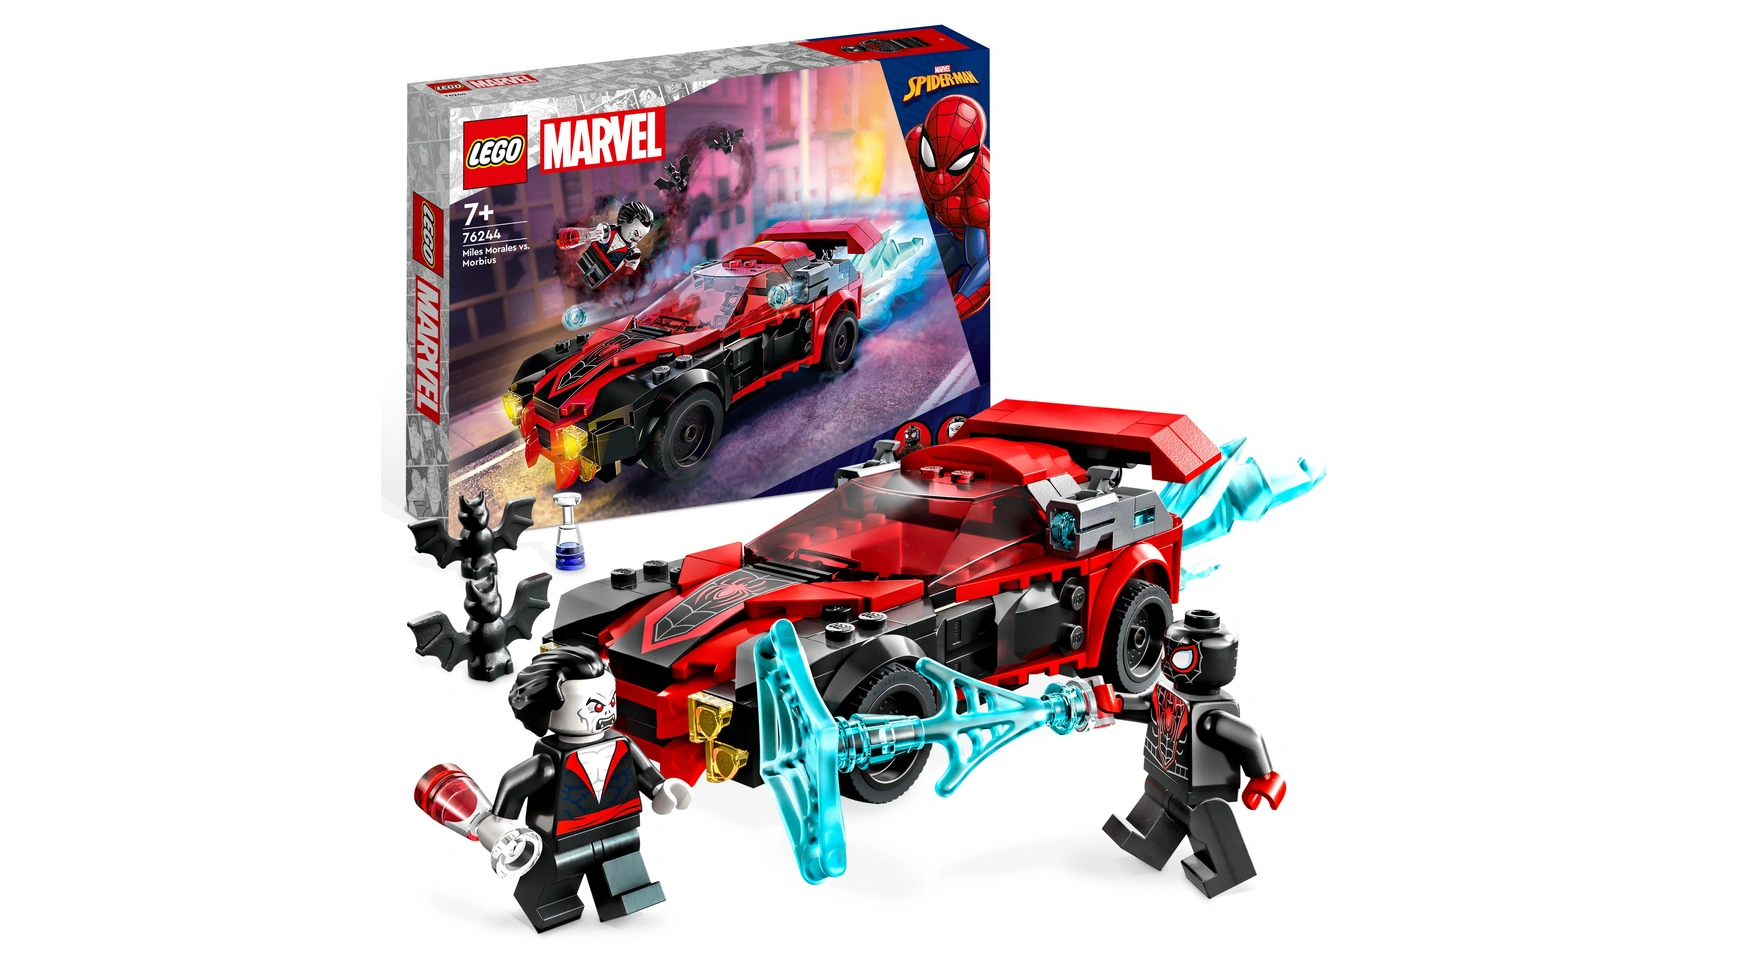 Lego Marvel Майлз Моралес против Морбиуса, игрушечная машина Человека-паука